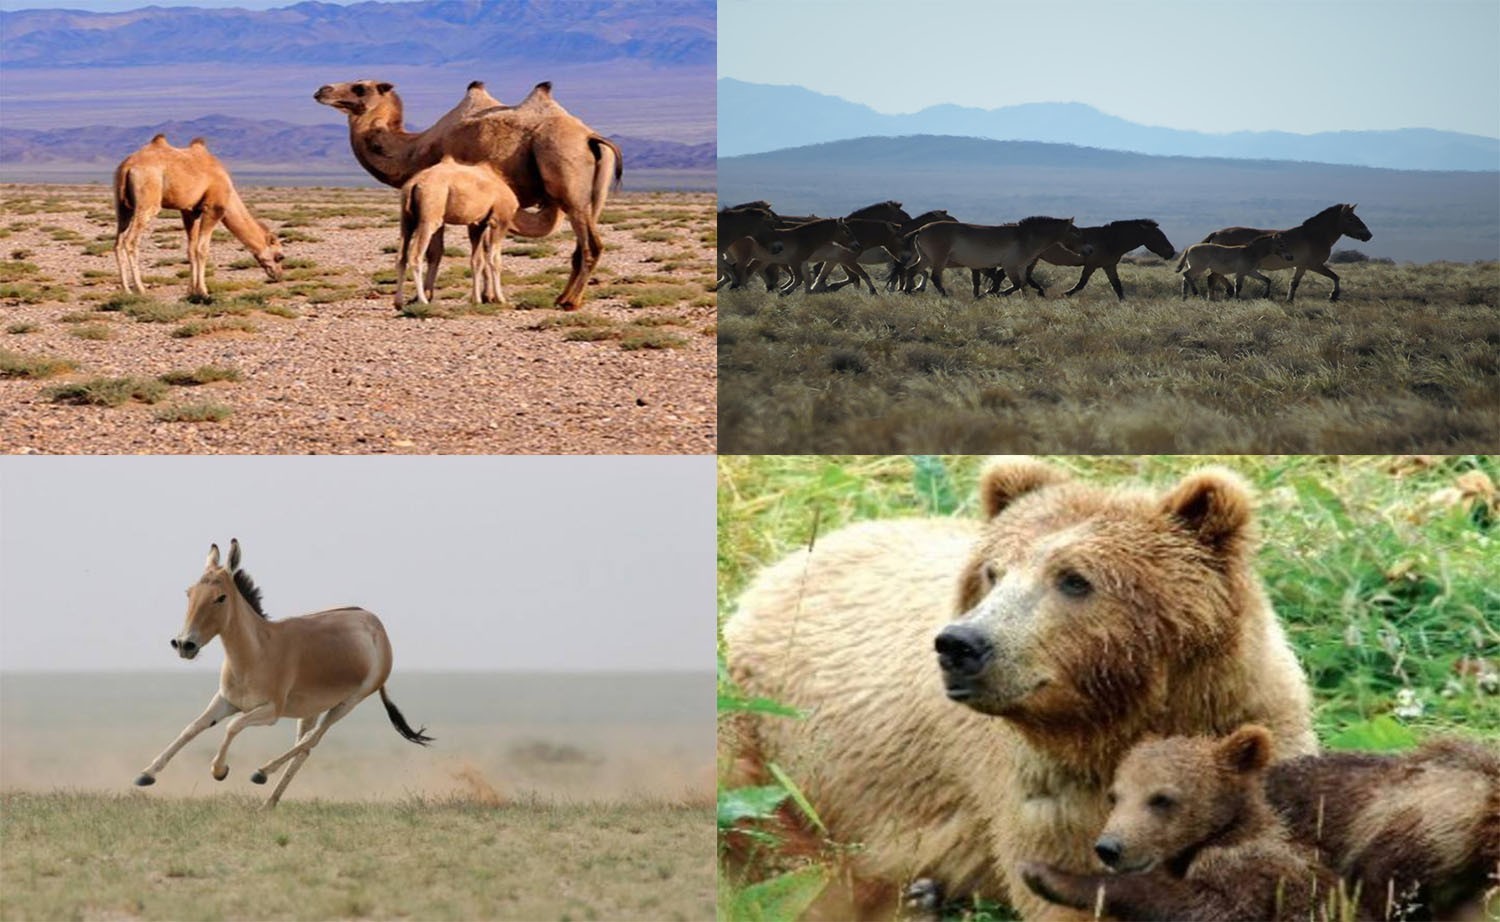 Introducing The Great Gobi Six- Integral Part of the Mongolian Gobi Ecosystem